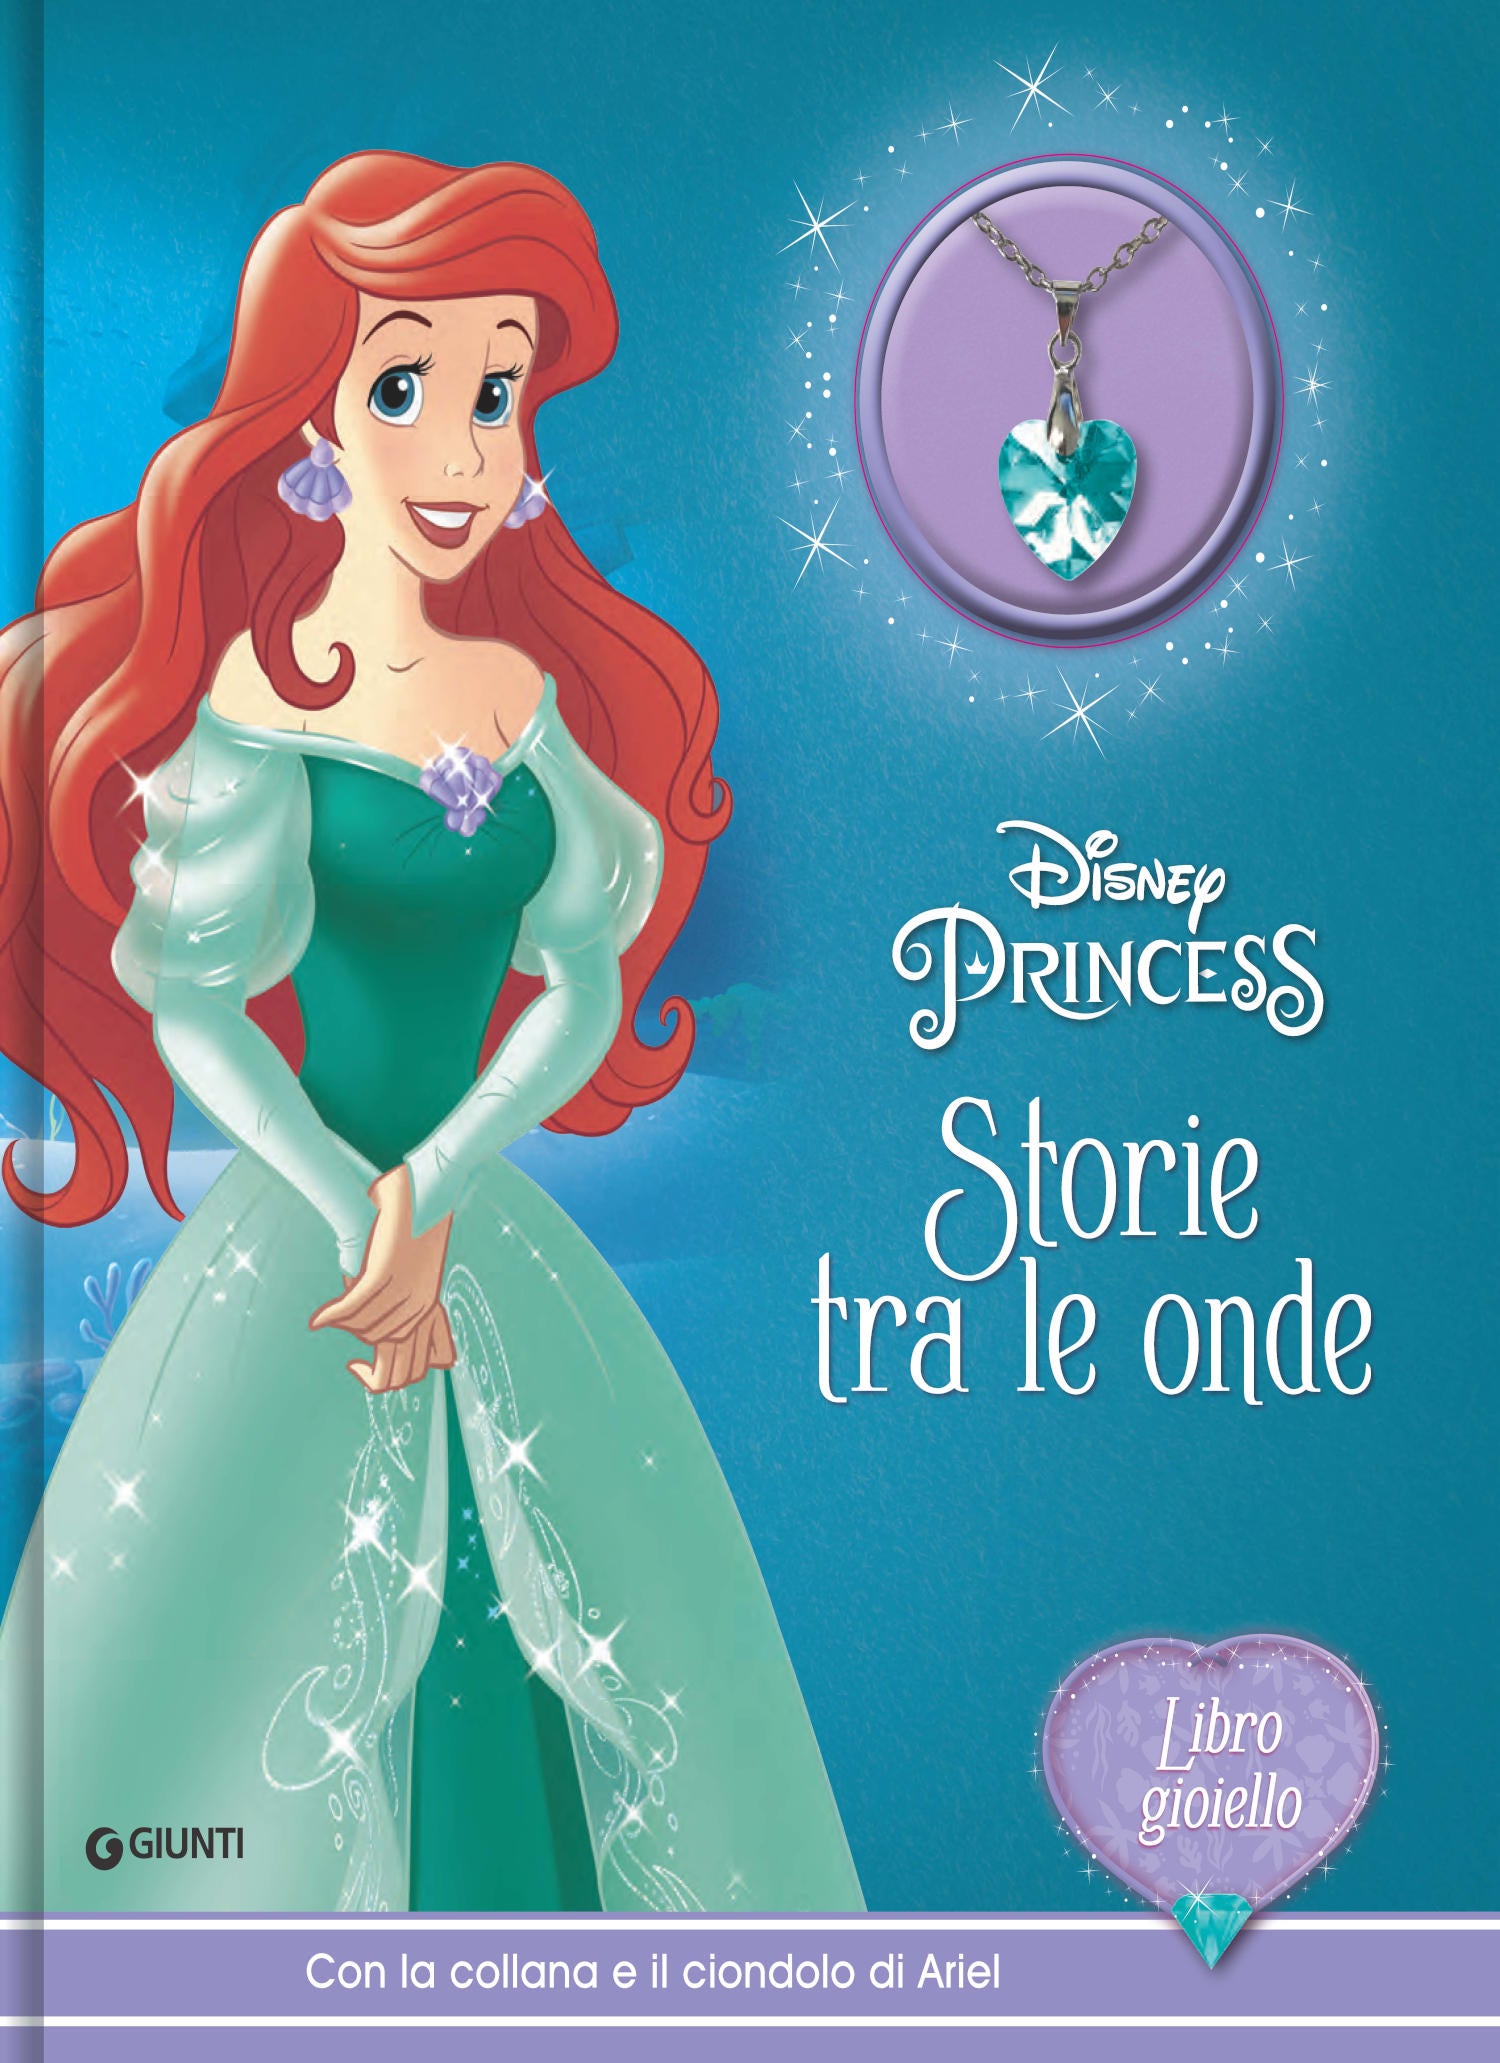 Disney Princess Storie tra le onde. Libro Gioiello: libro di Walt Disney